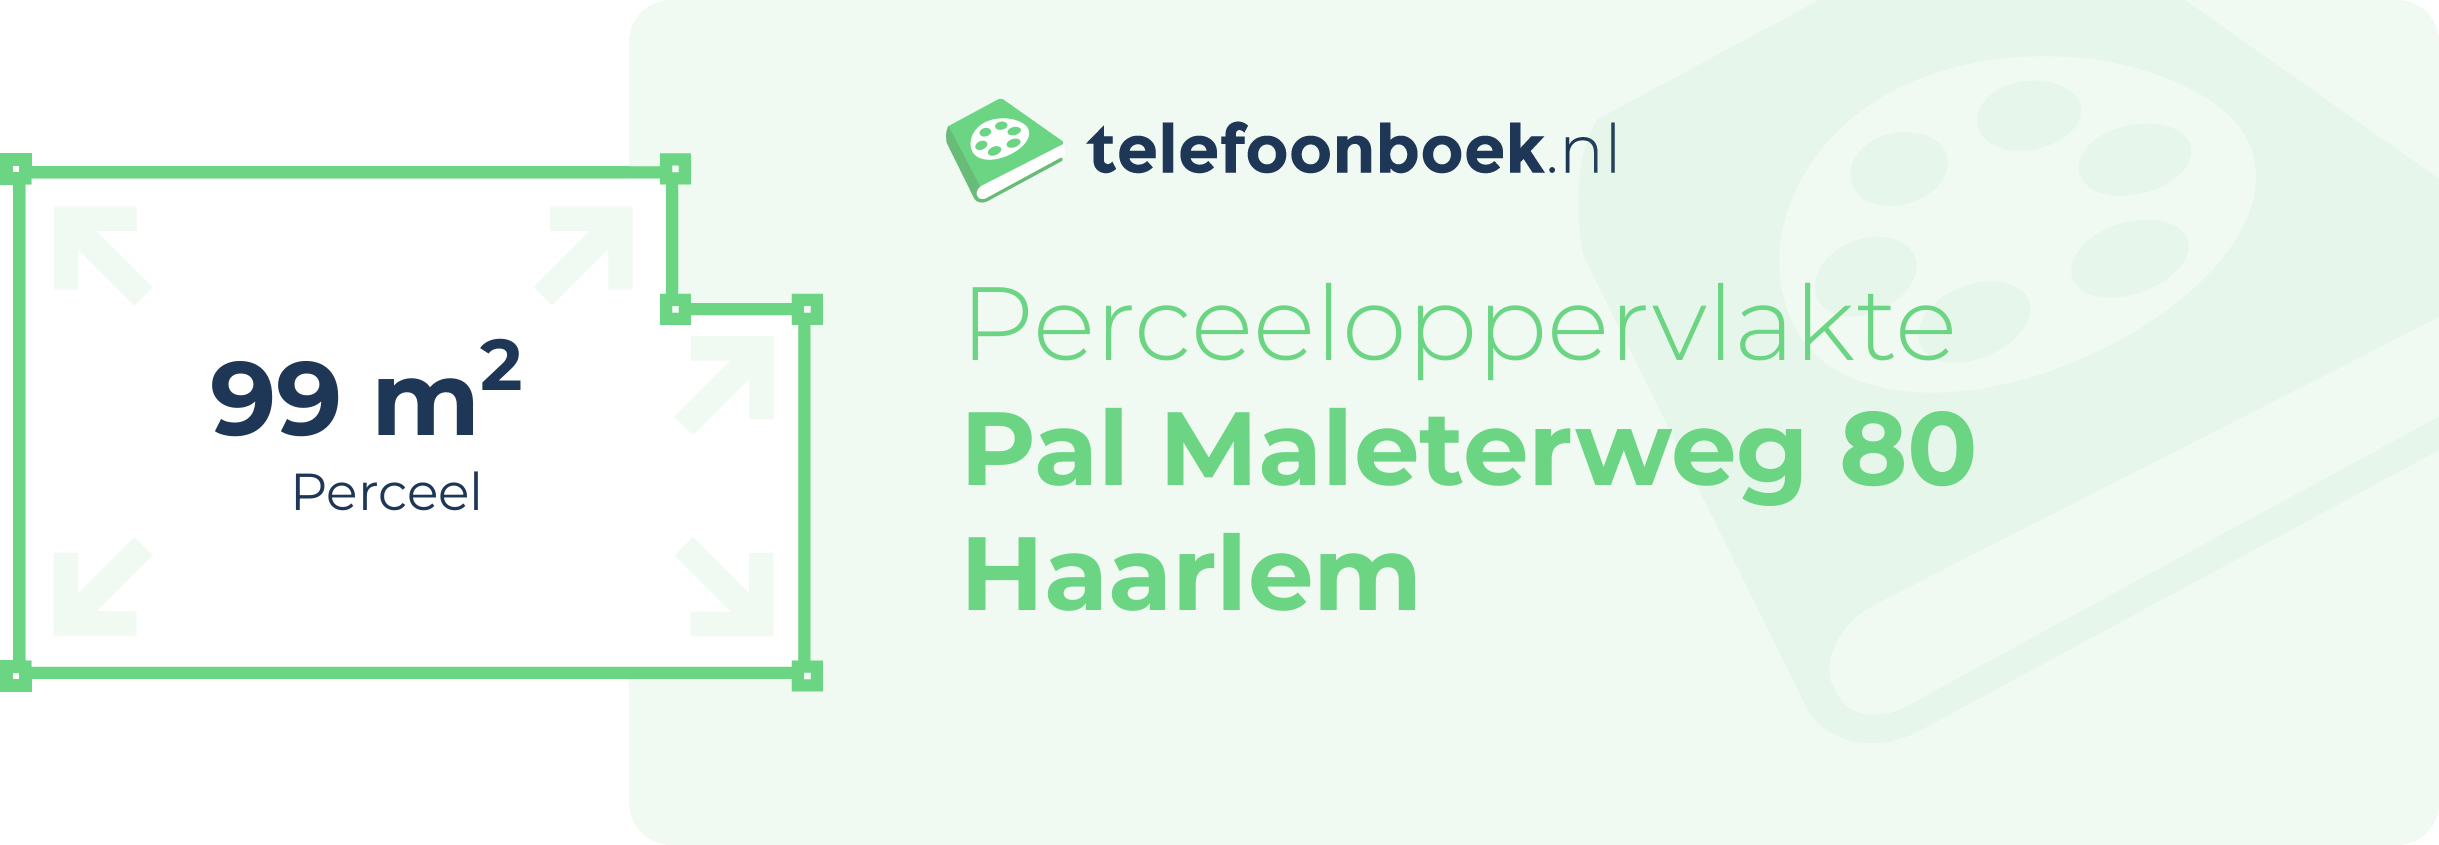 Perceeloppervlakte Pal Maleterweg 80 Haarlem